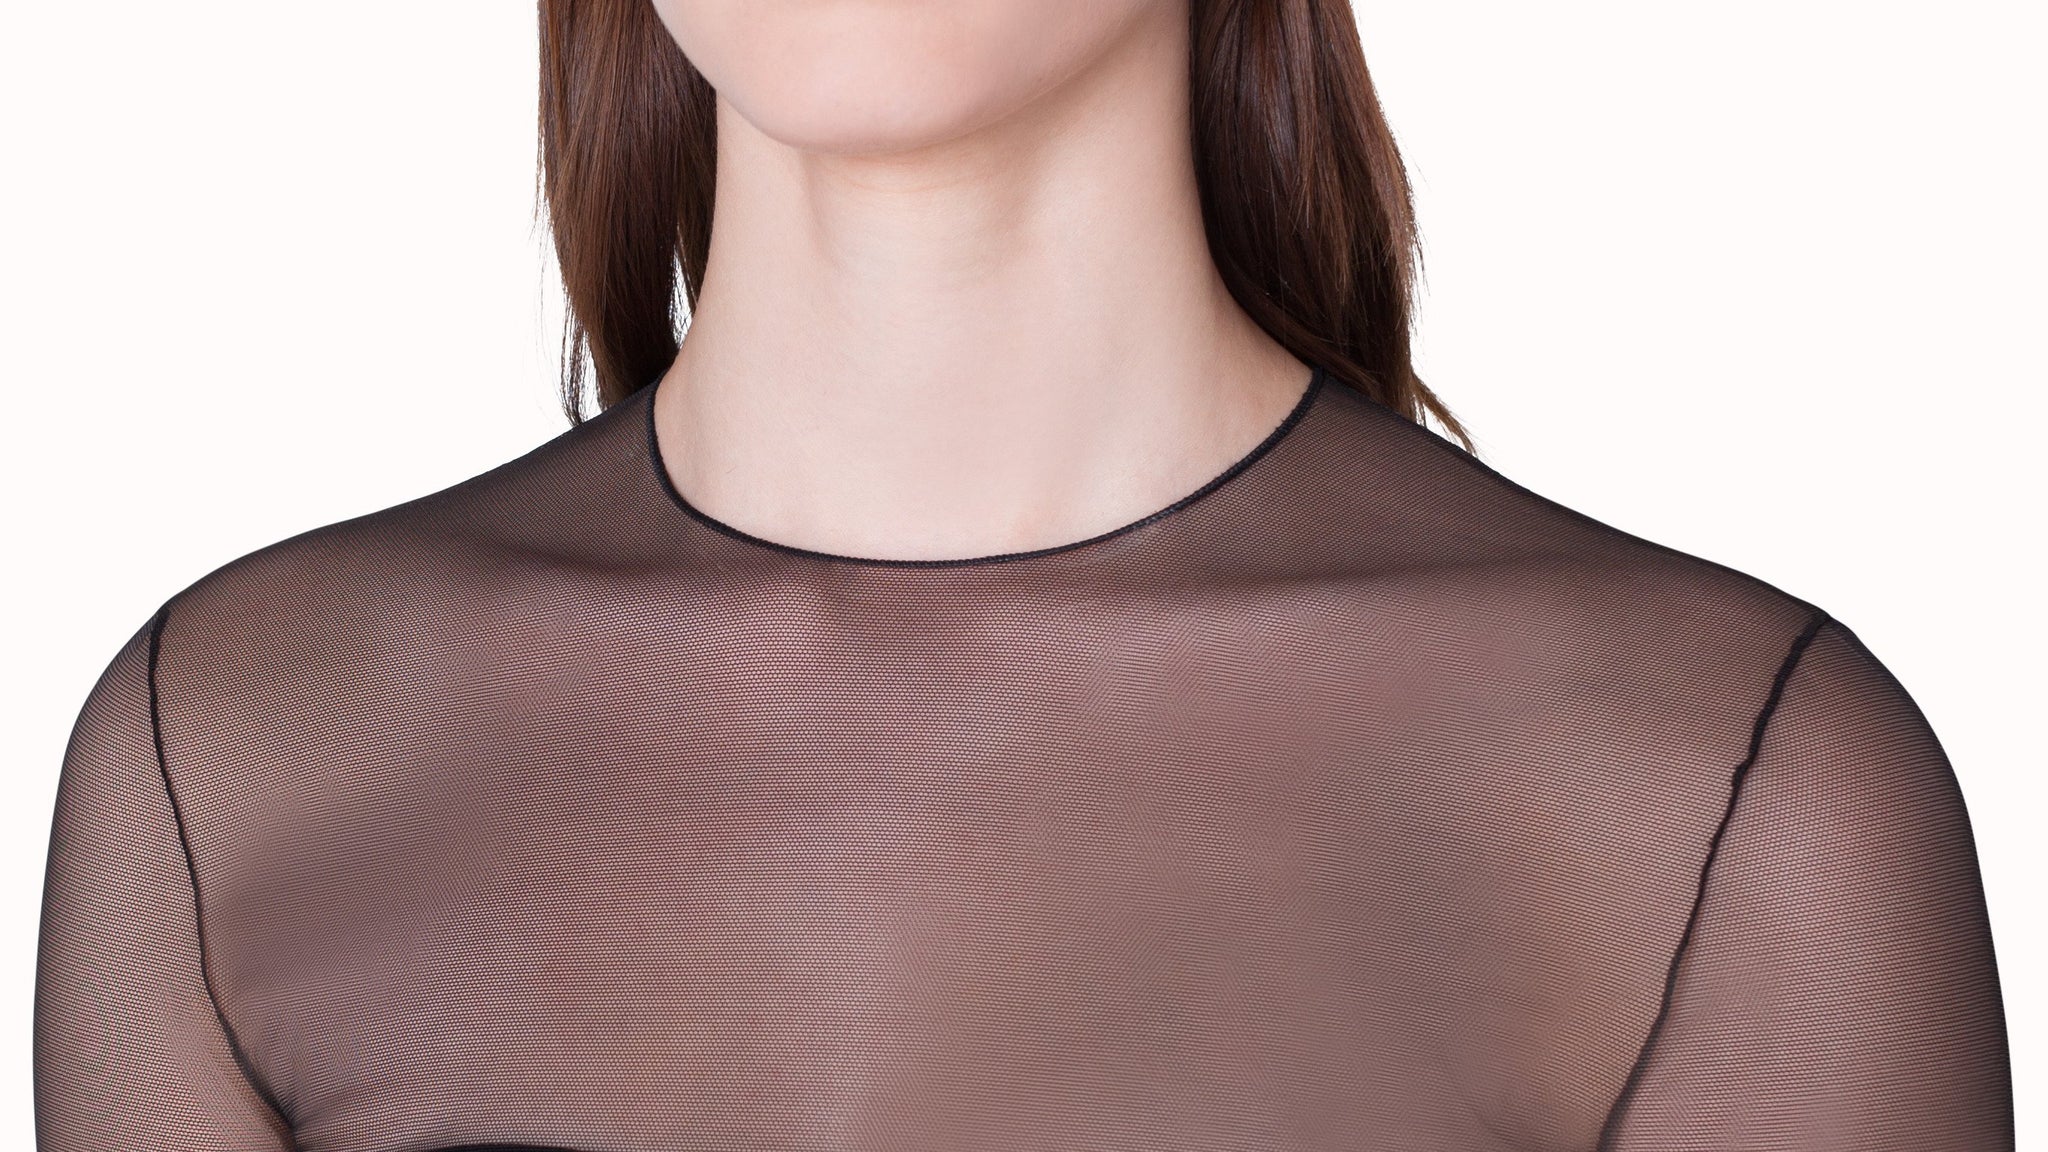 The Black See Through Double Layers Shirt: Women's Sheer Long